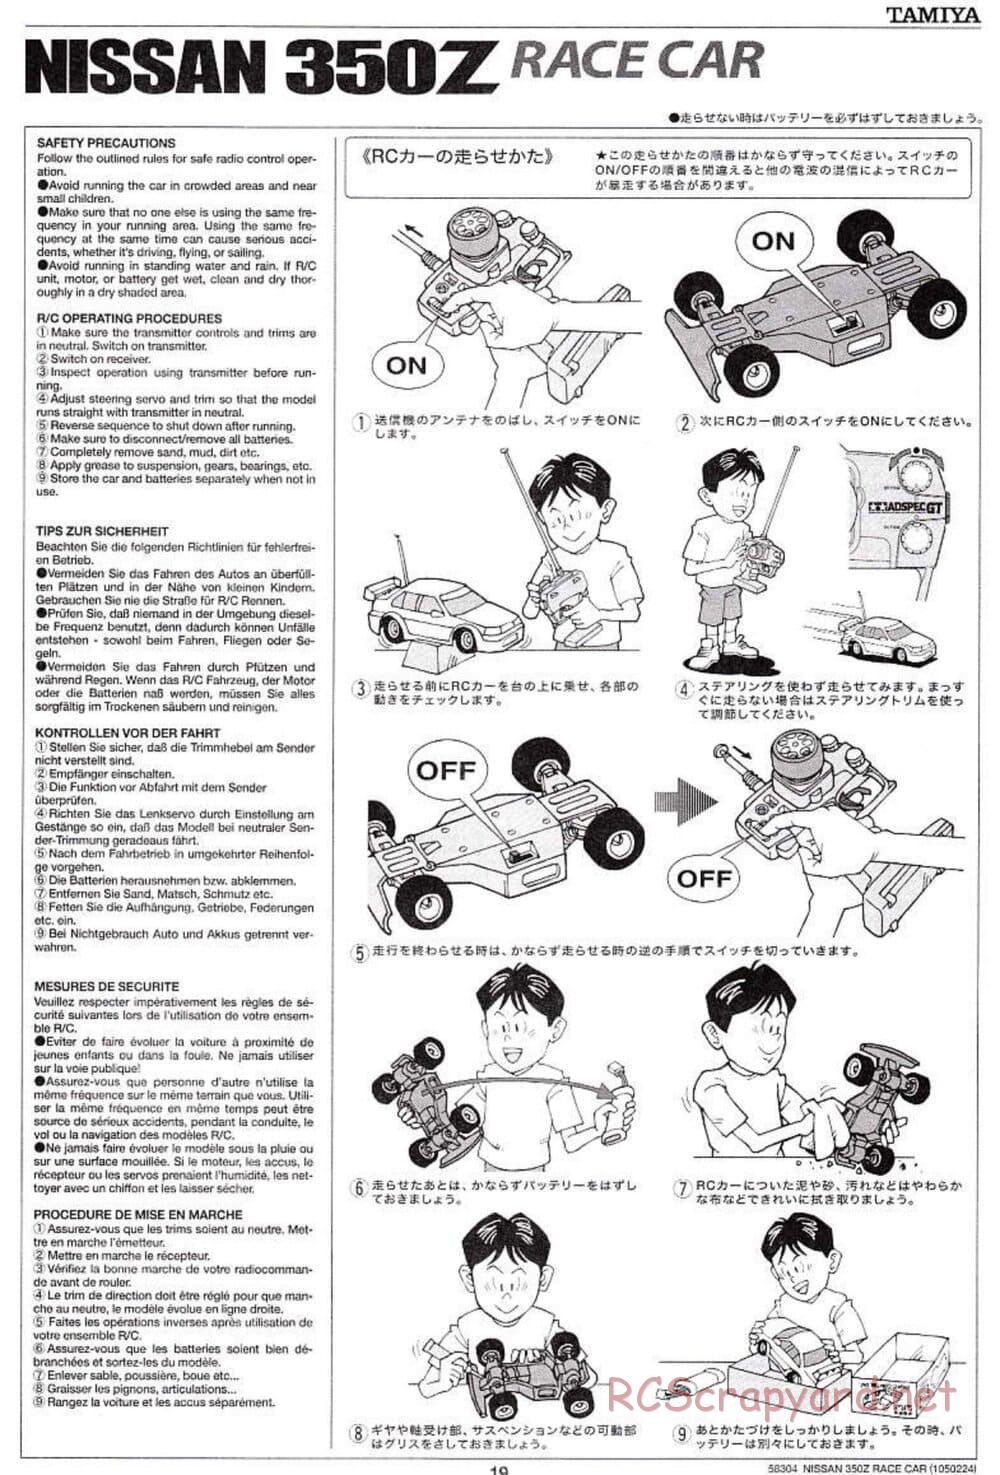 Tamiya - Nissan 350Z Race-Car - TT-01 Chassis - Manual - Page 19